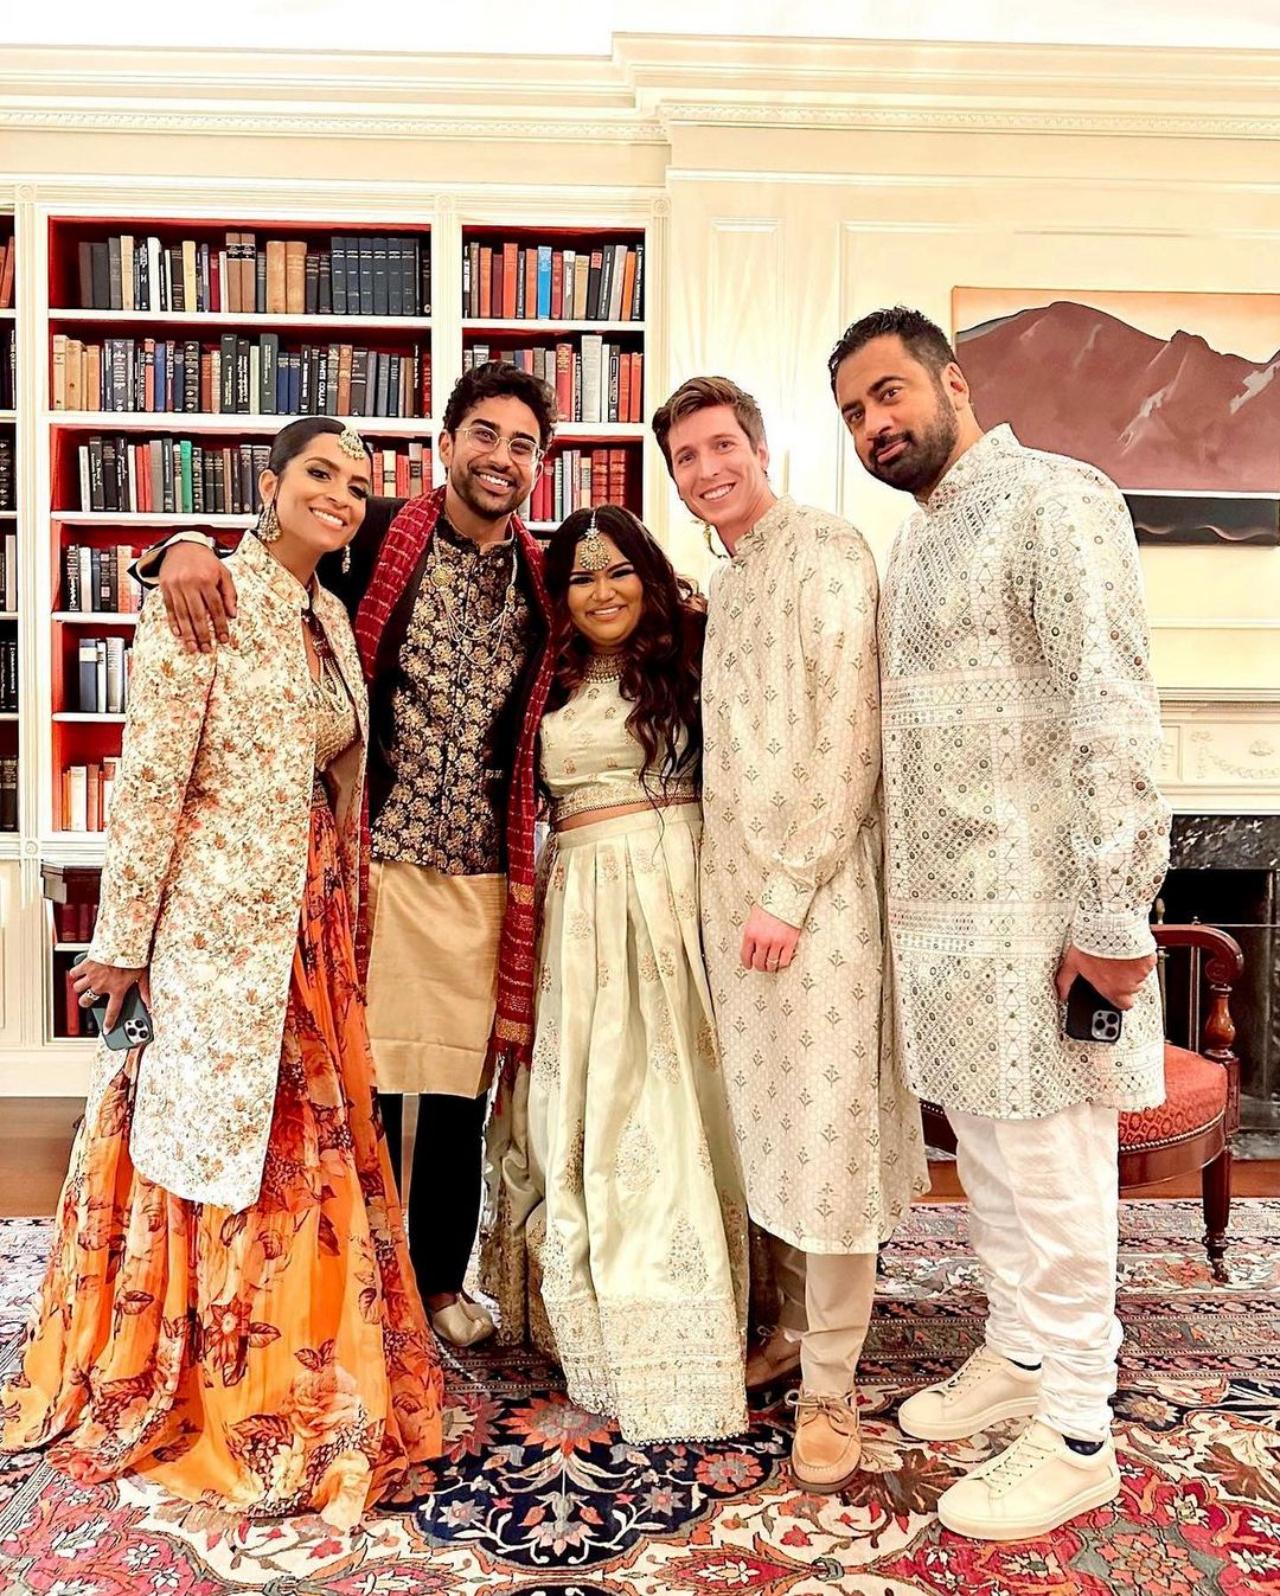 Inside The White House Diwali with Lilly Singh, Kal Penn, Suraj Sharma